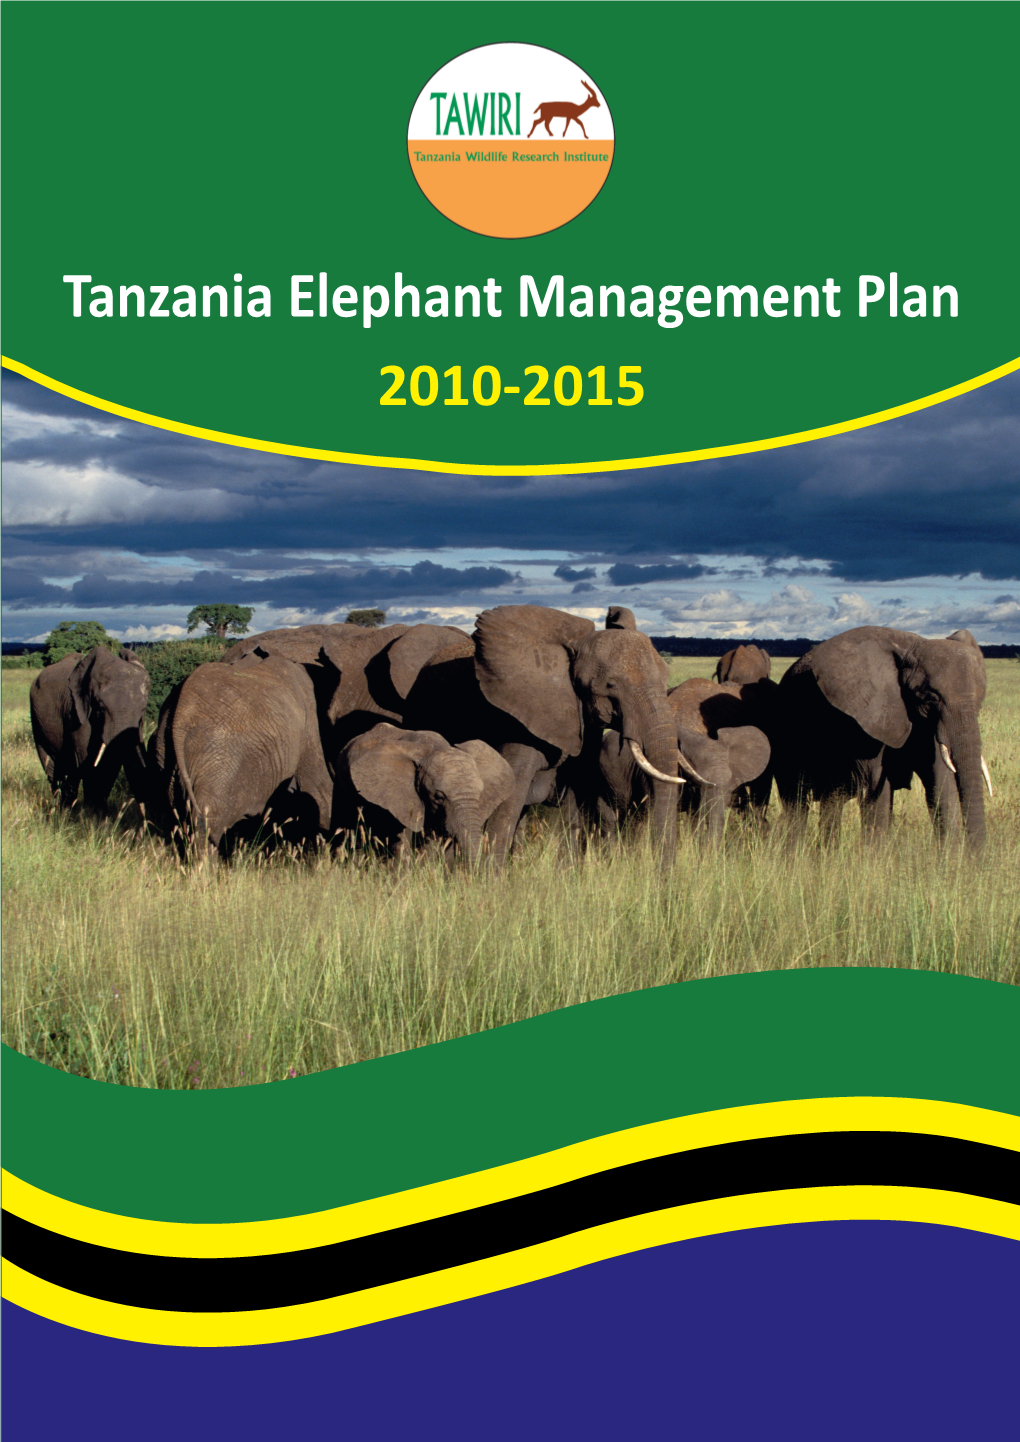 Tanzania Elephant Management Plan 2010-2015